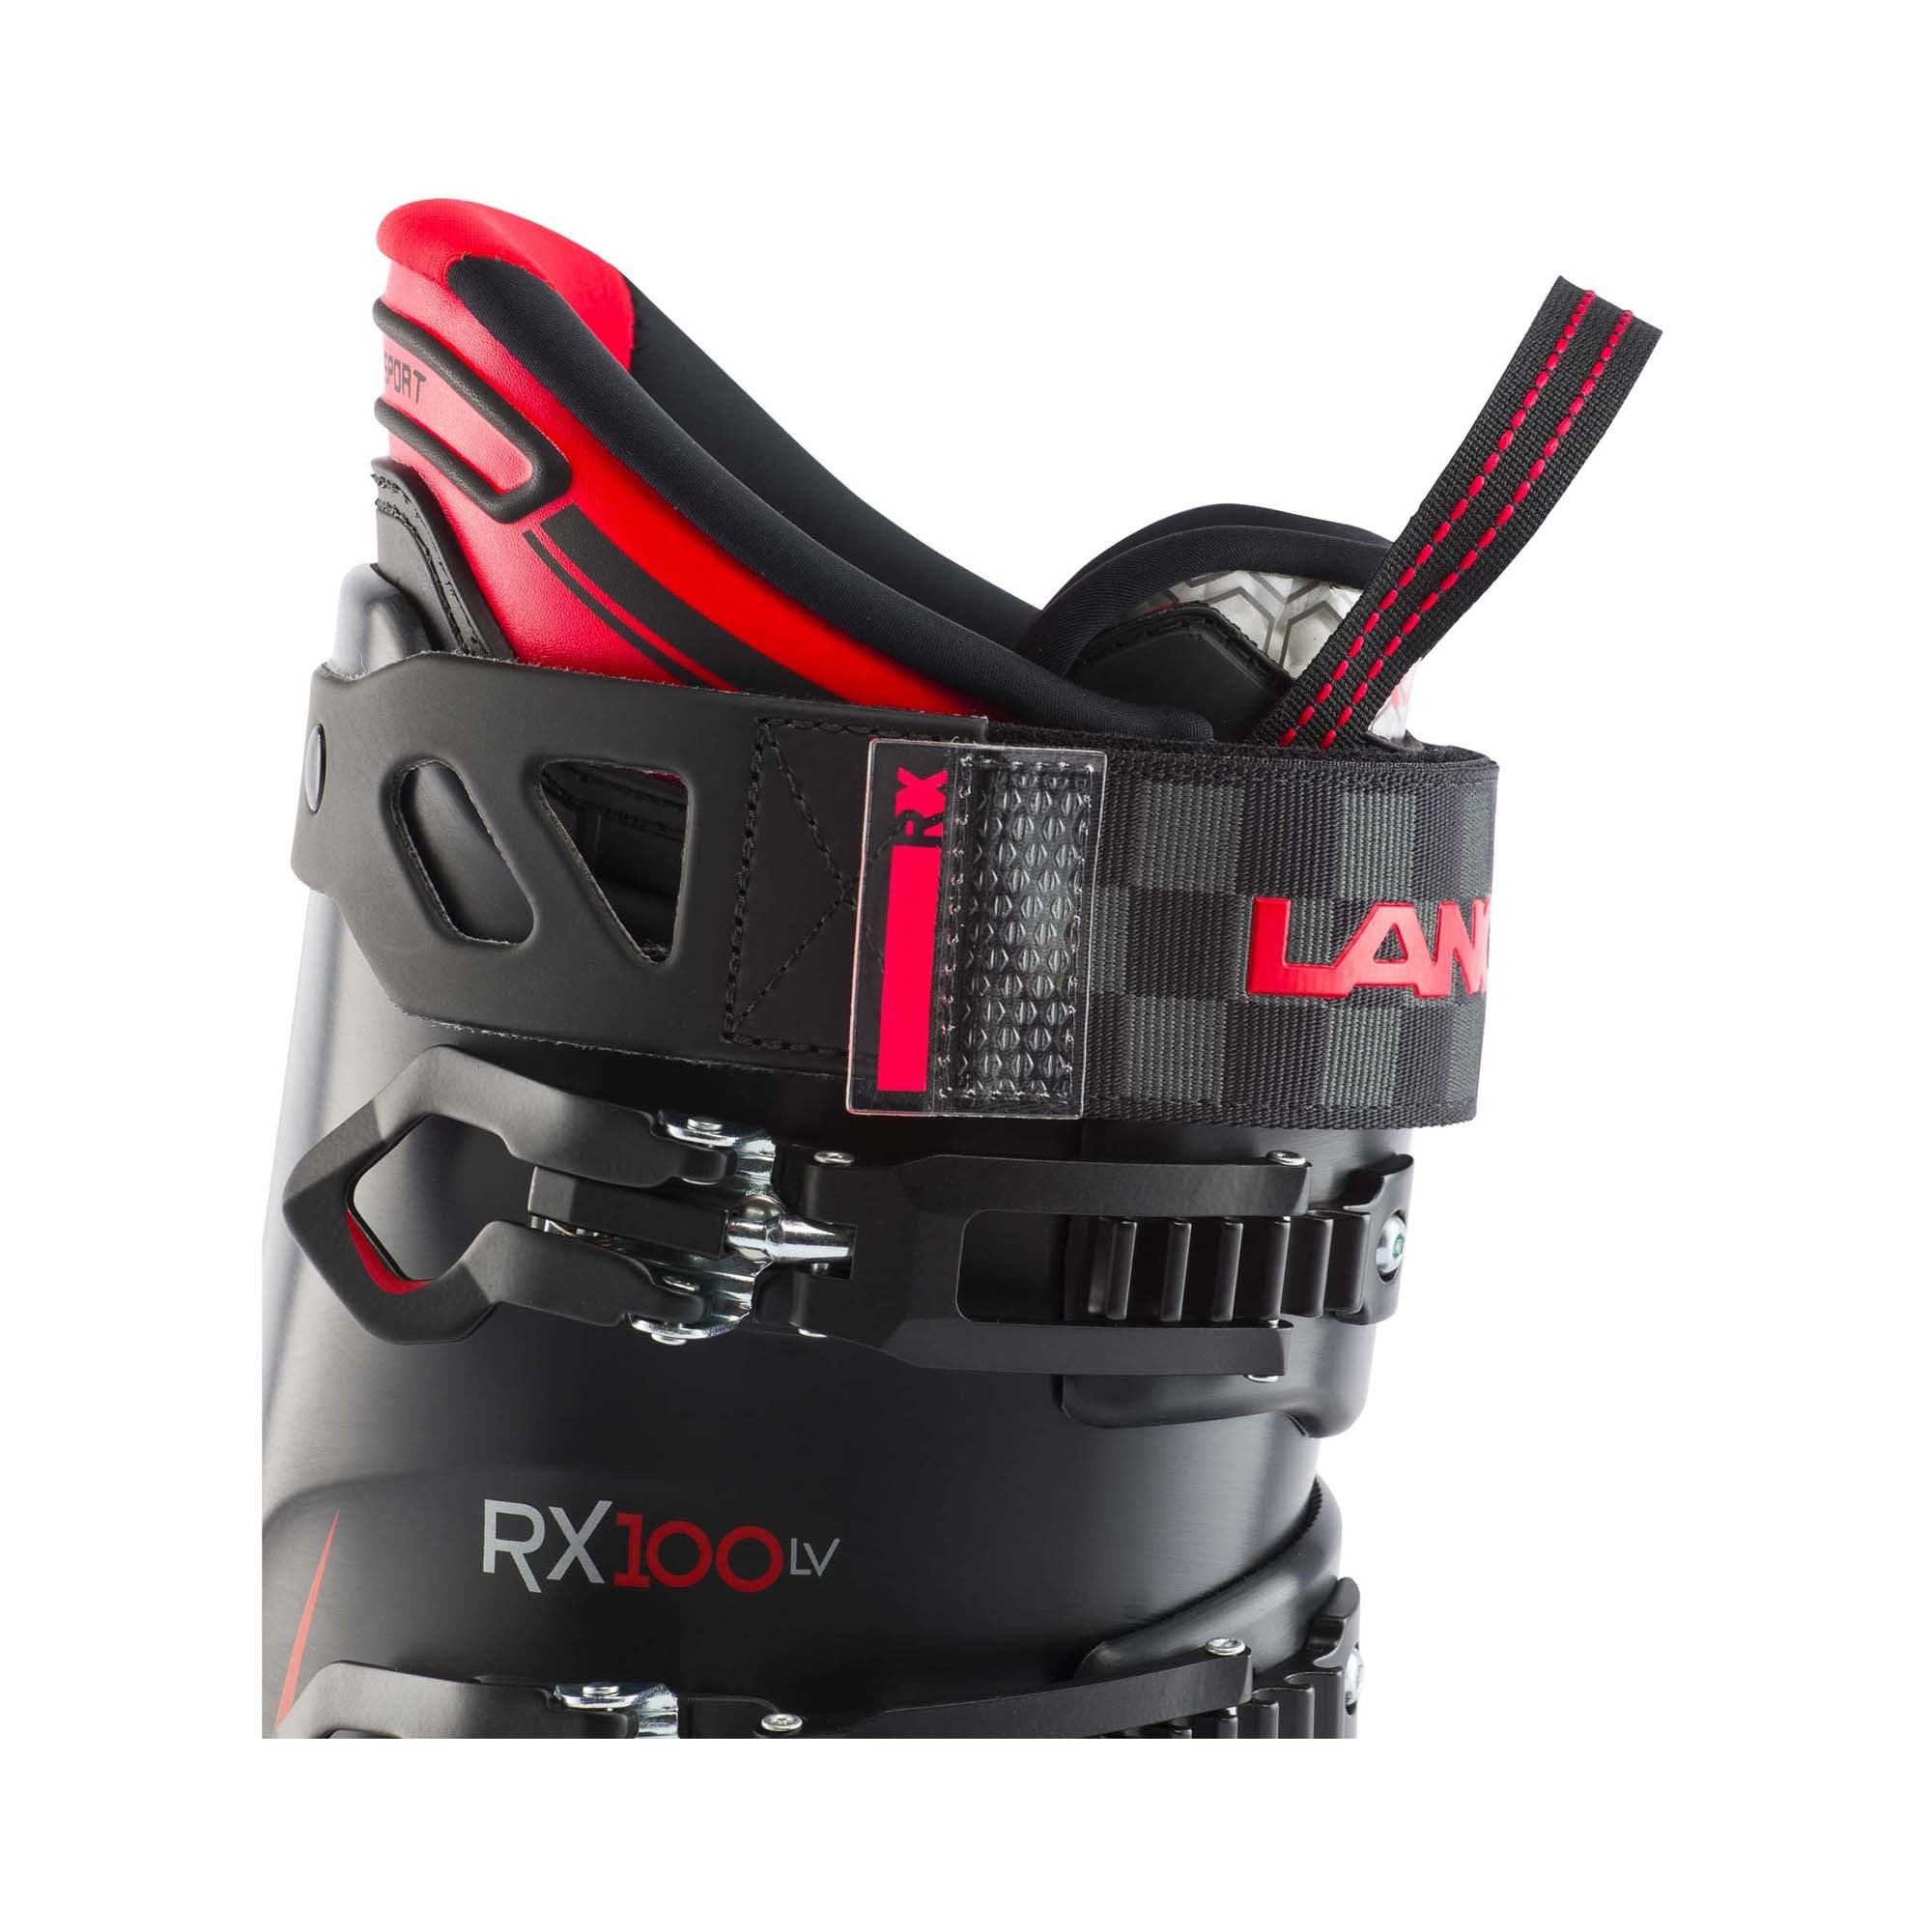 RX 100 LV Mens Ski Boot